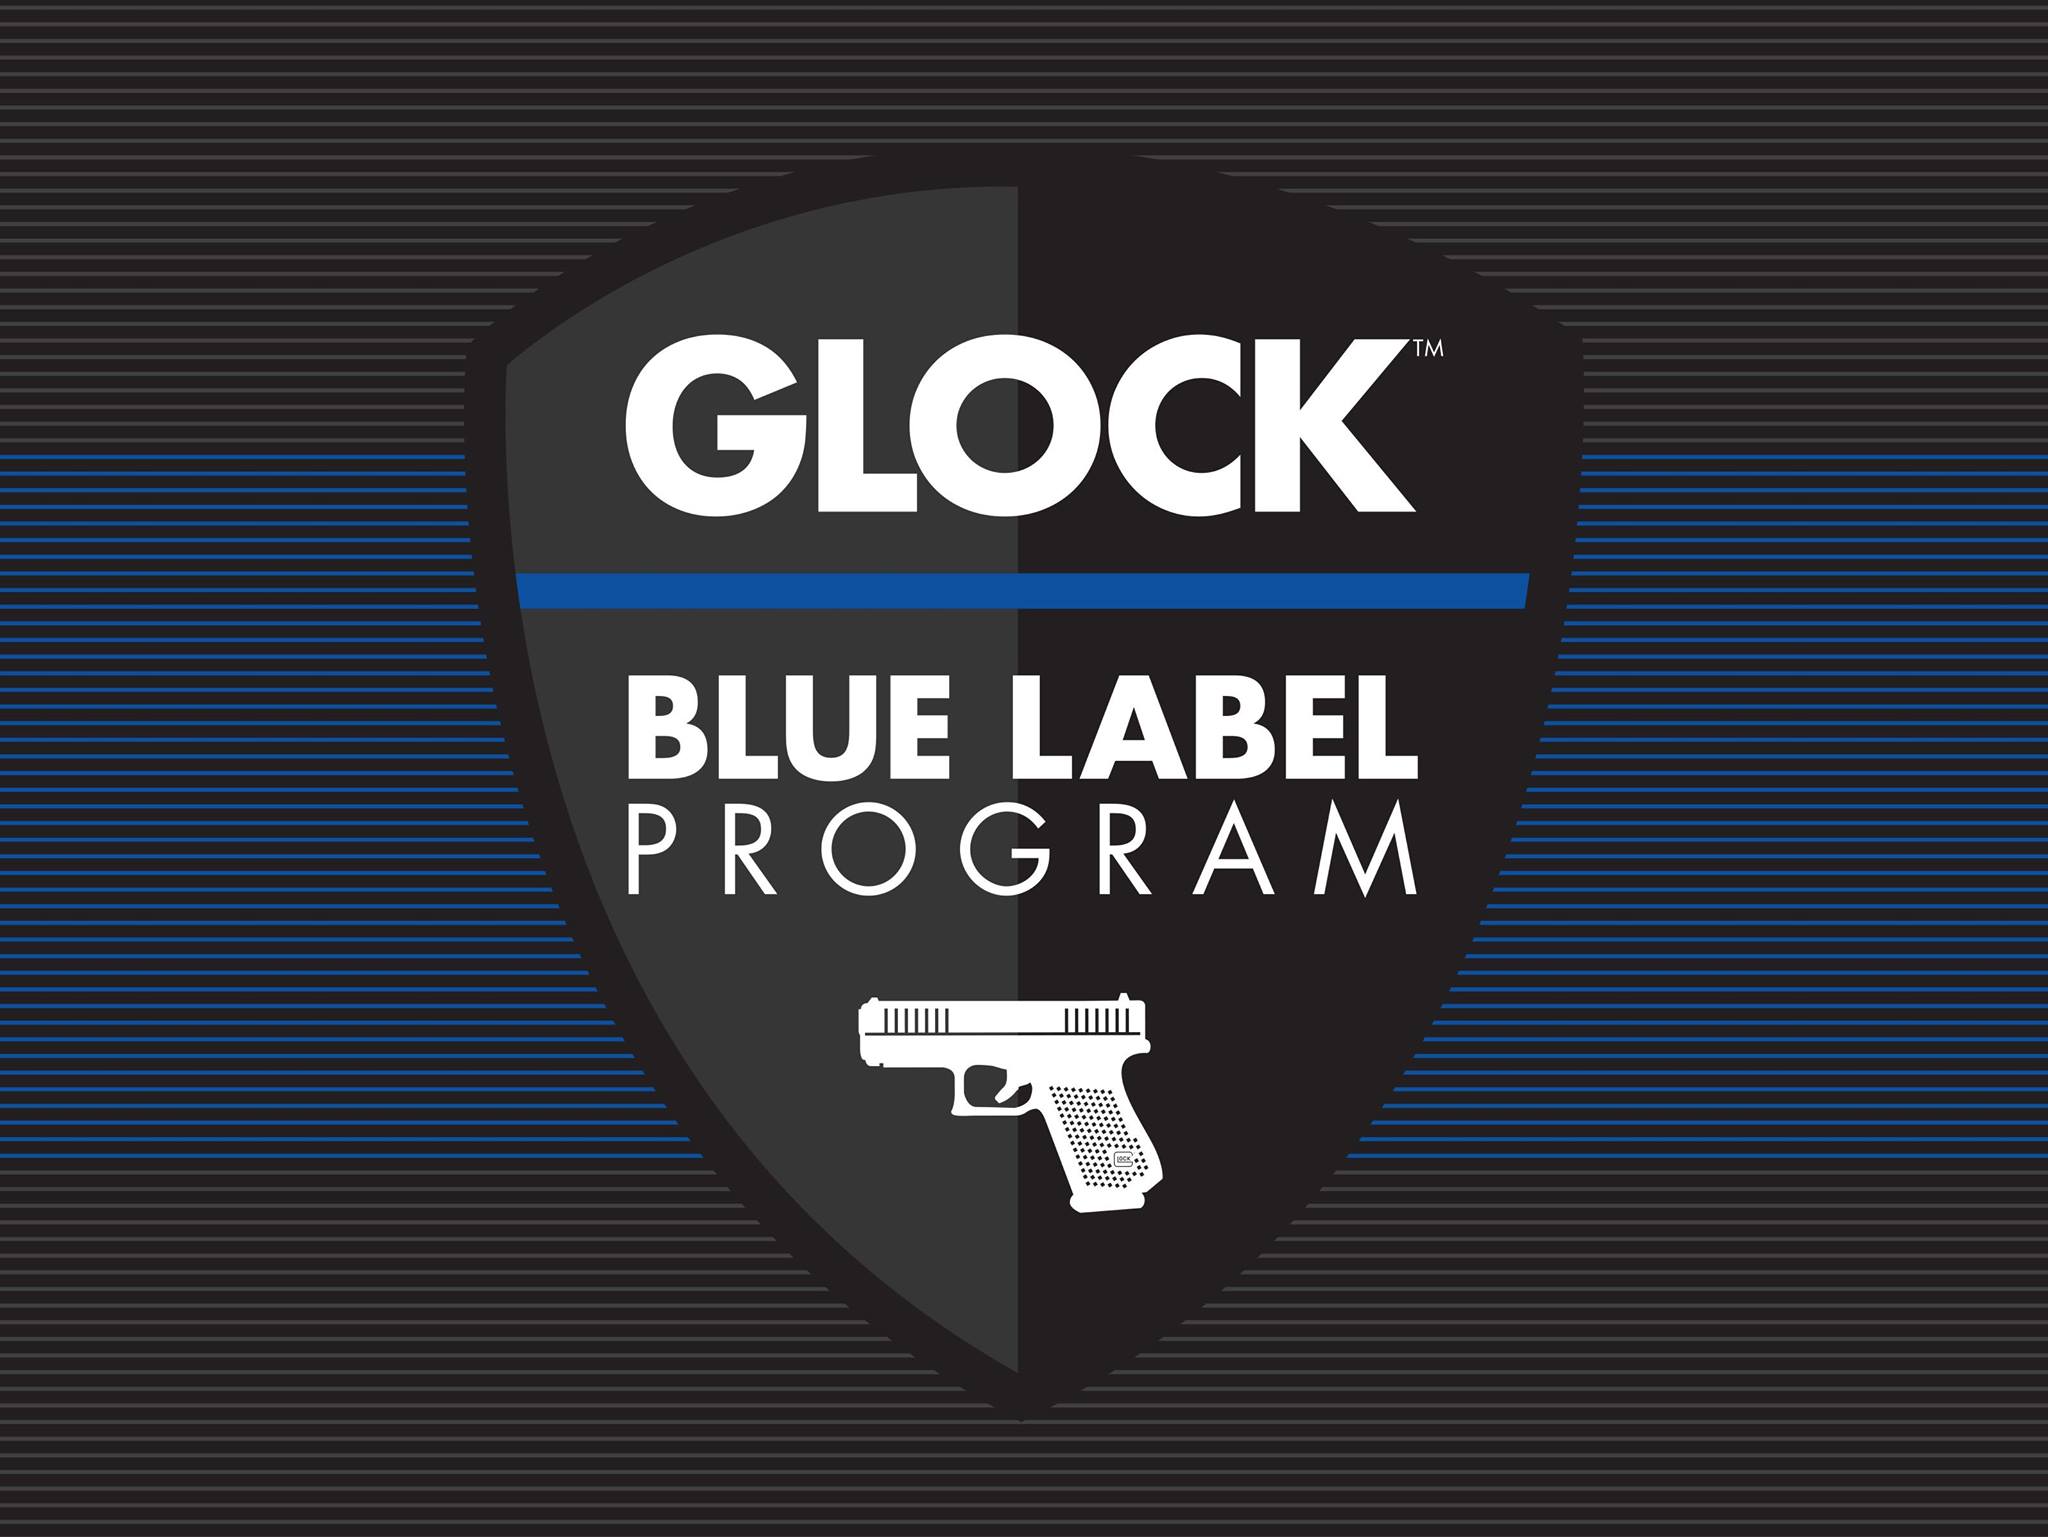 glock-blue-label-program-dealer-southeast-guns-longwood-new